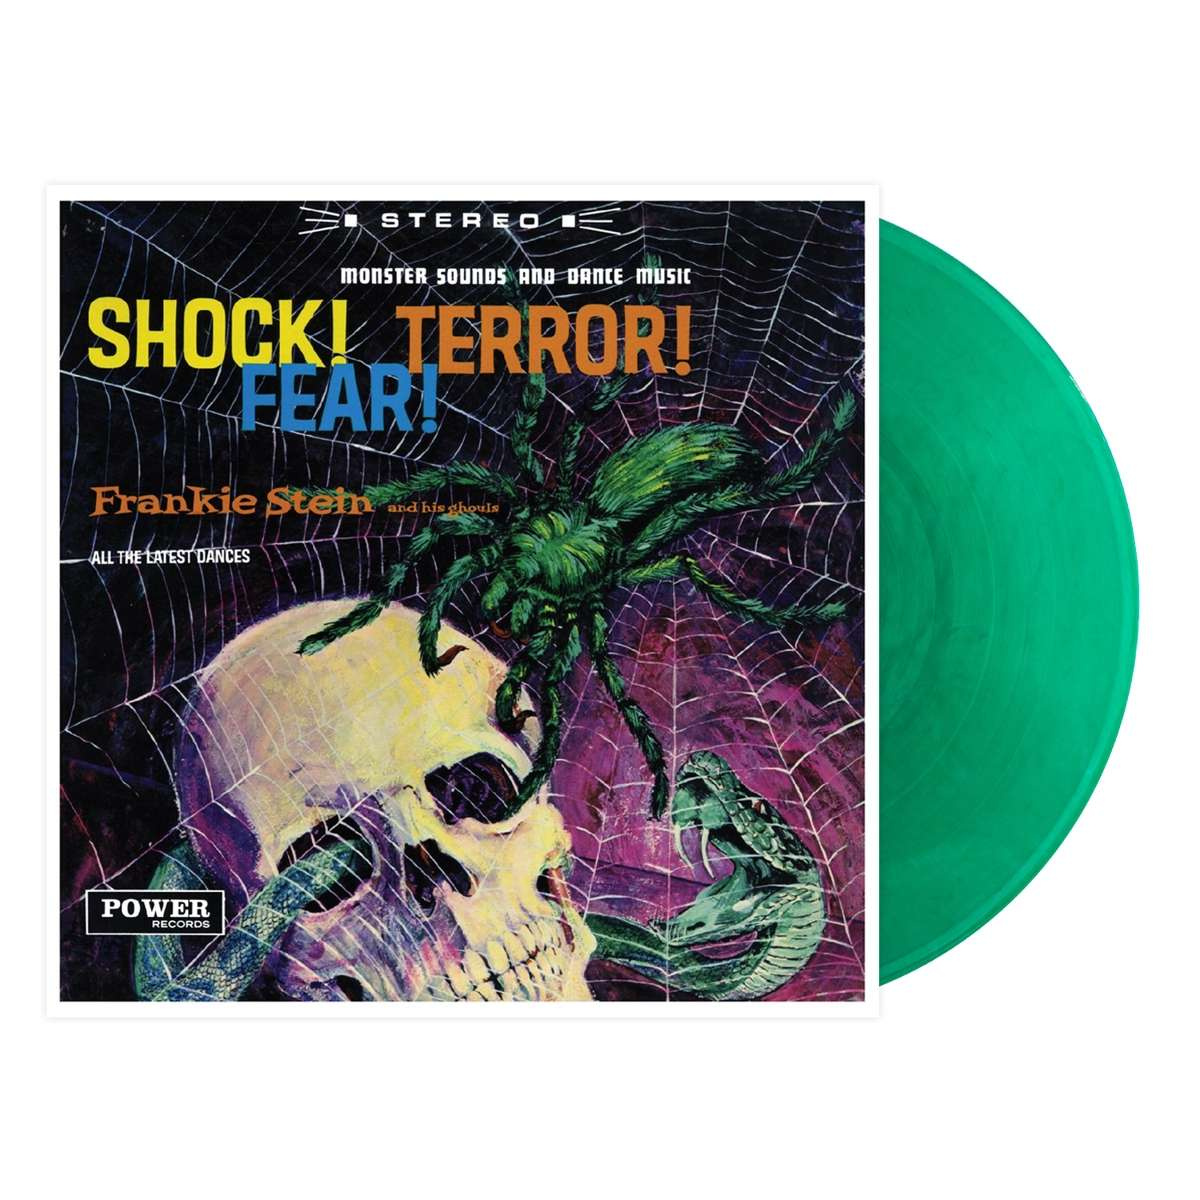 SHOCK! TERROR! FEAR! (LIMITED EMERALD GREEN VINYL EDITION)